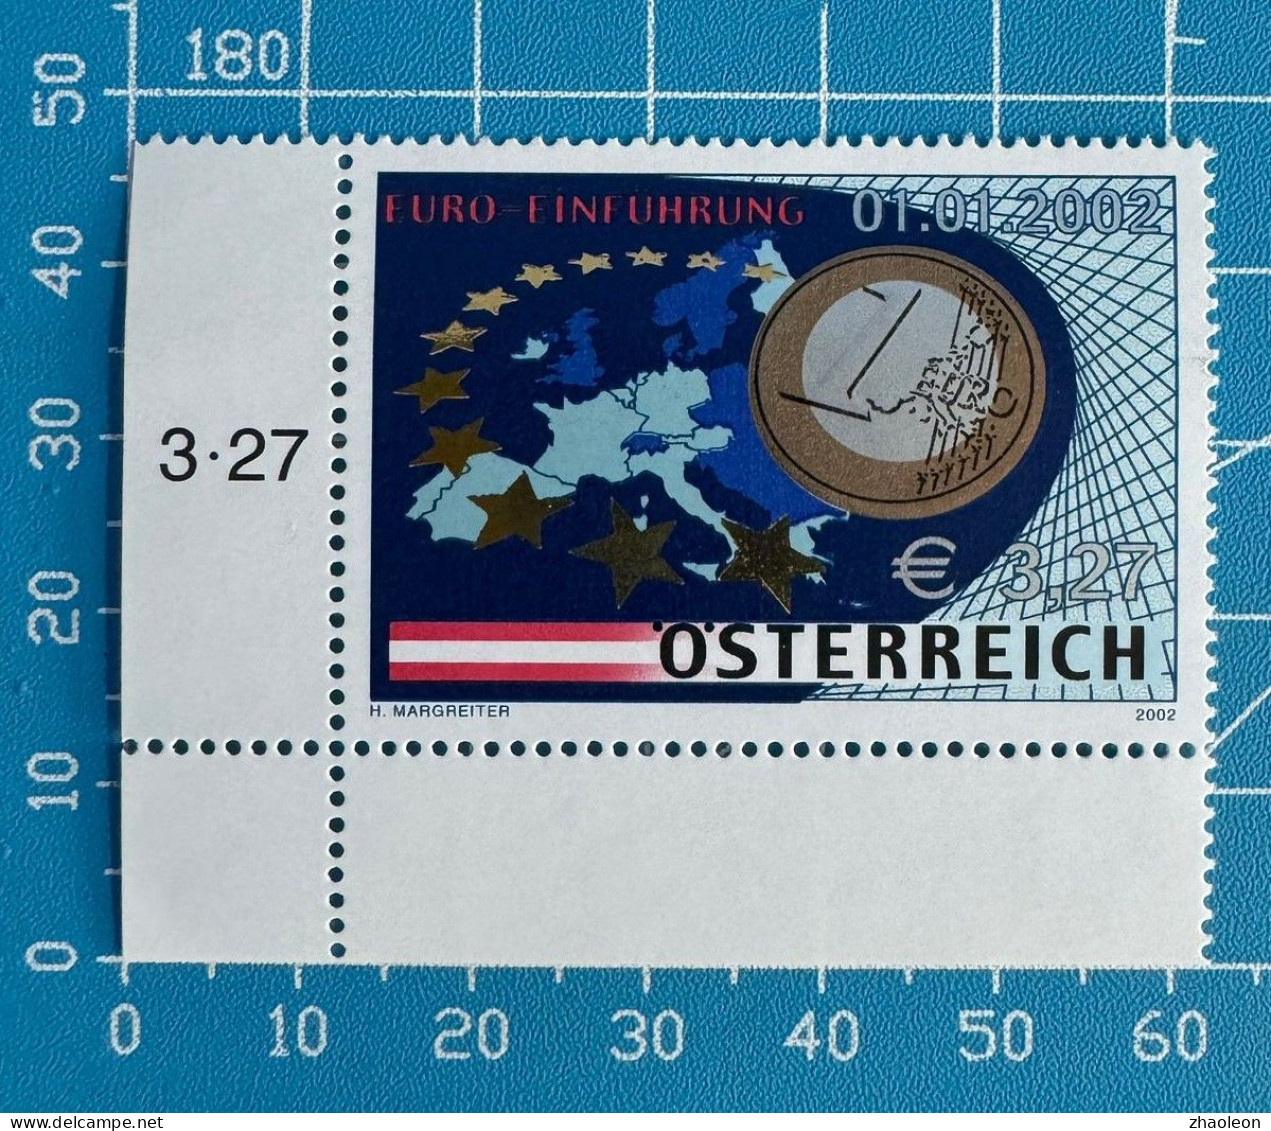 EURO-Einführung/ EURO Introduction Austria 2368 - Nuovi